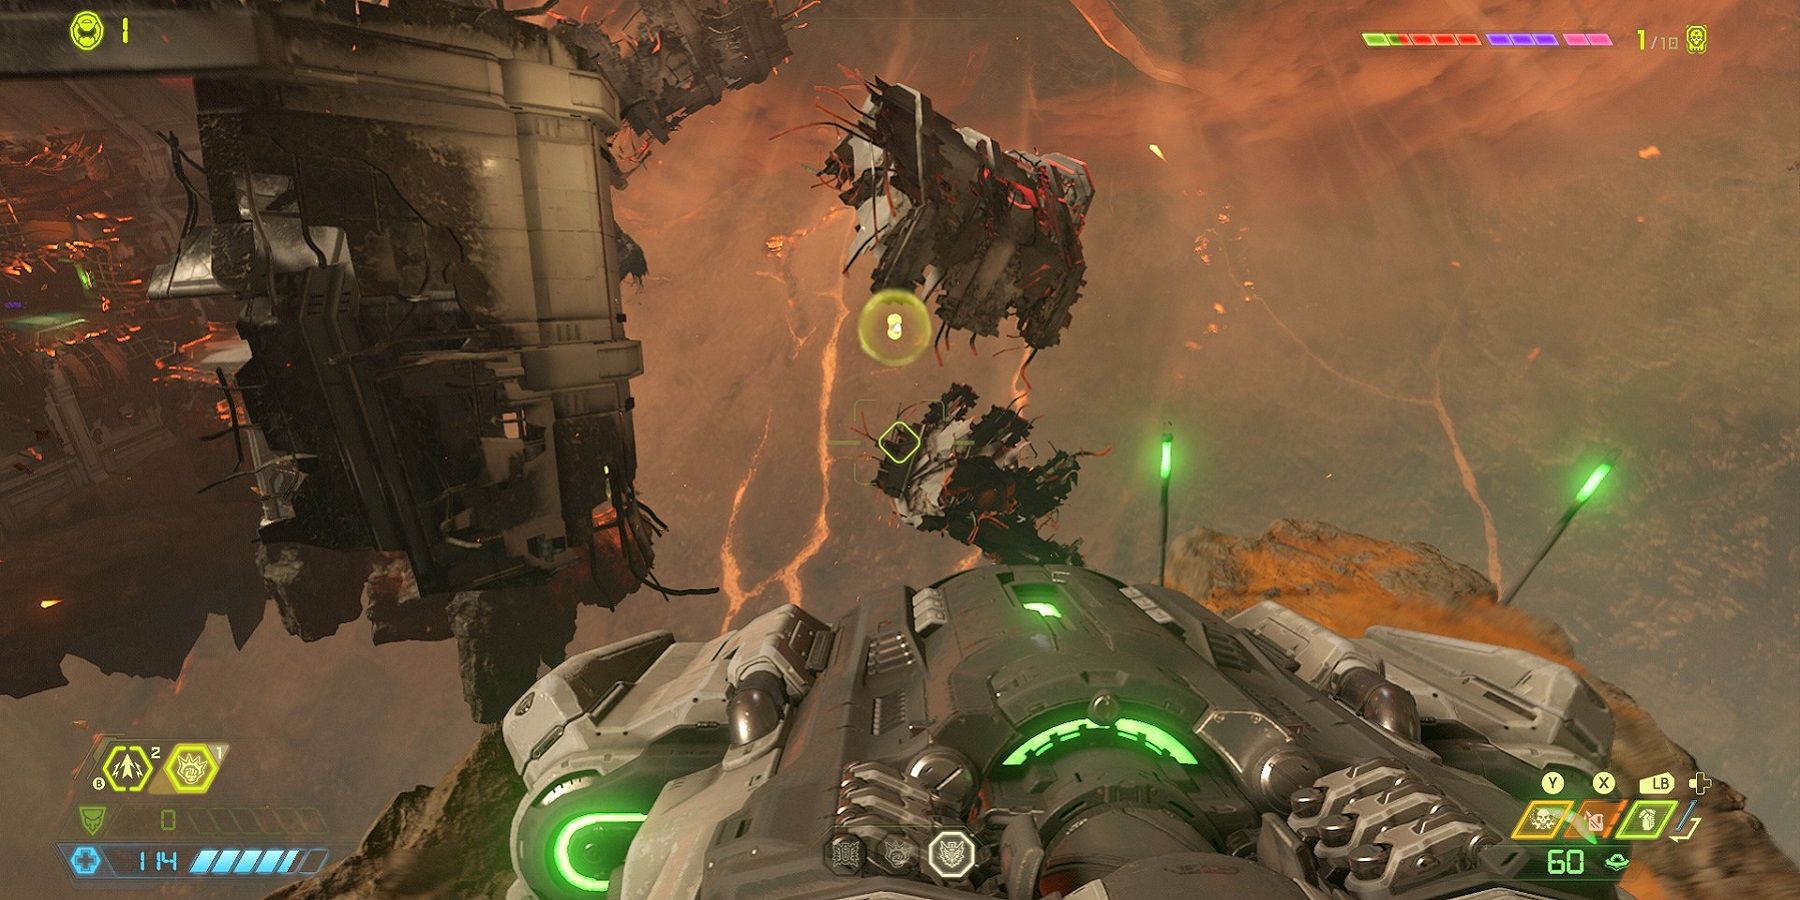 Screenshot from Doom Eternal showing the BFG weapon.